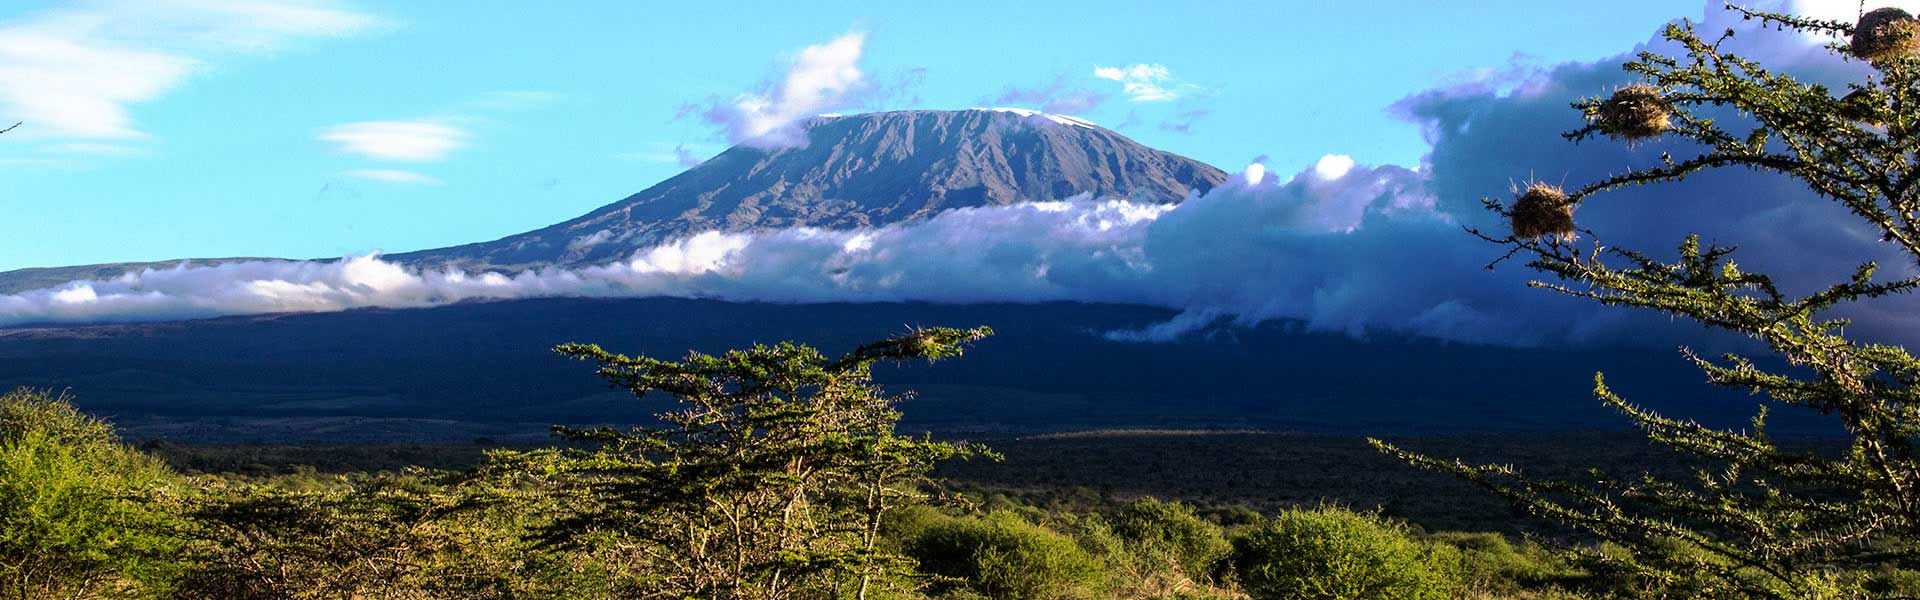 Kilimanjaro Population